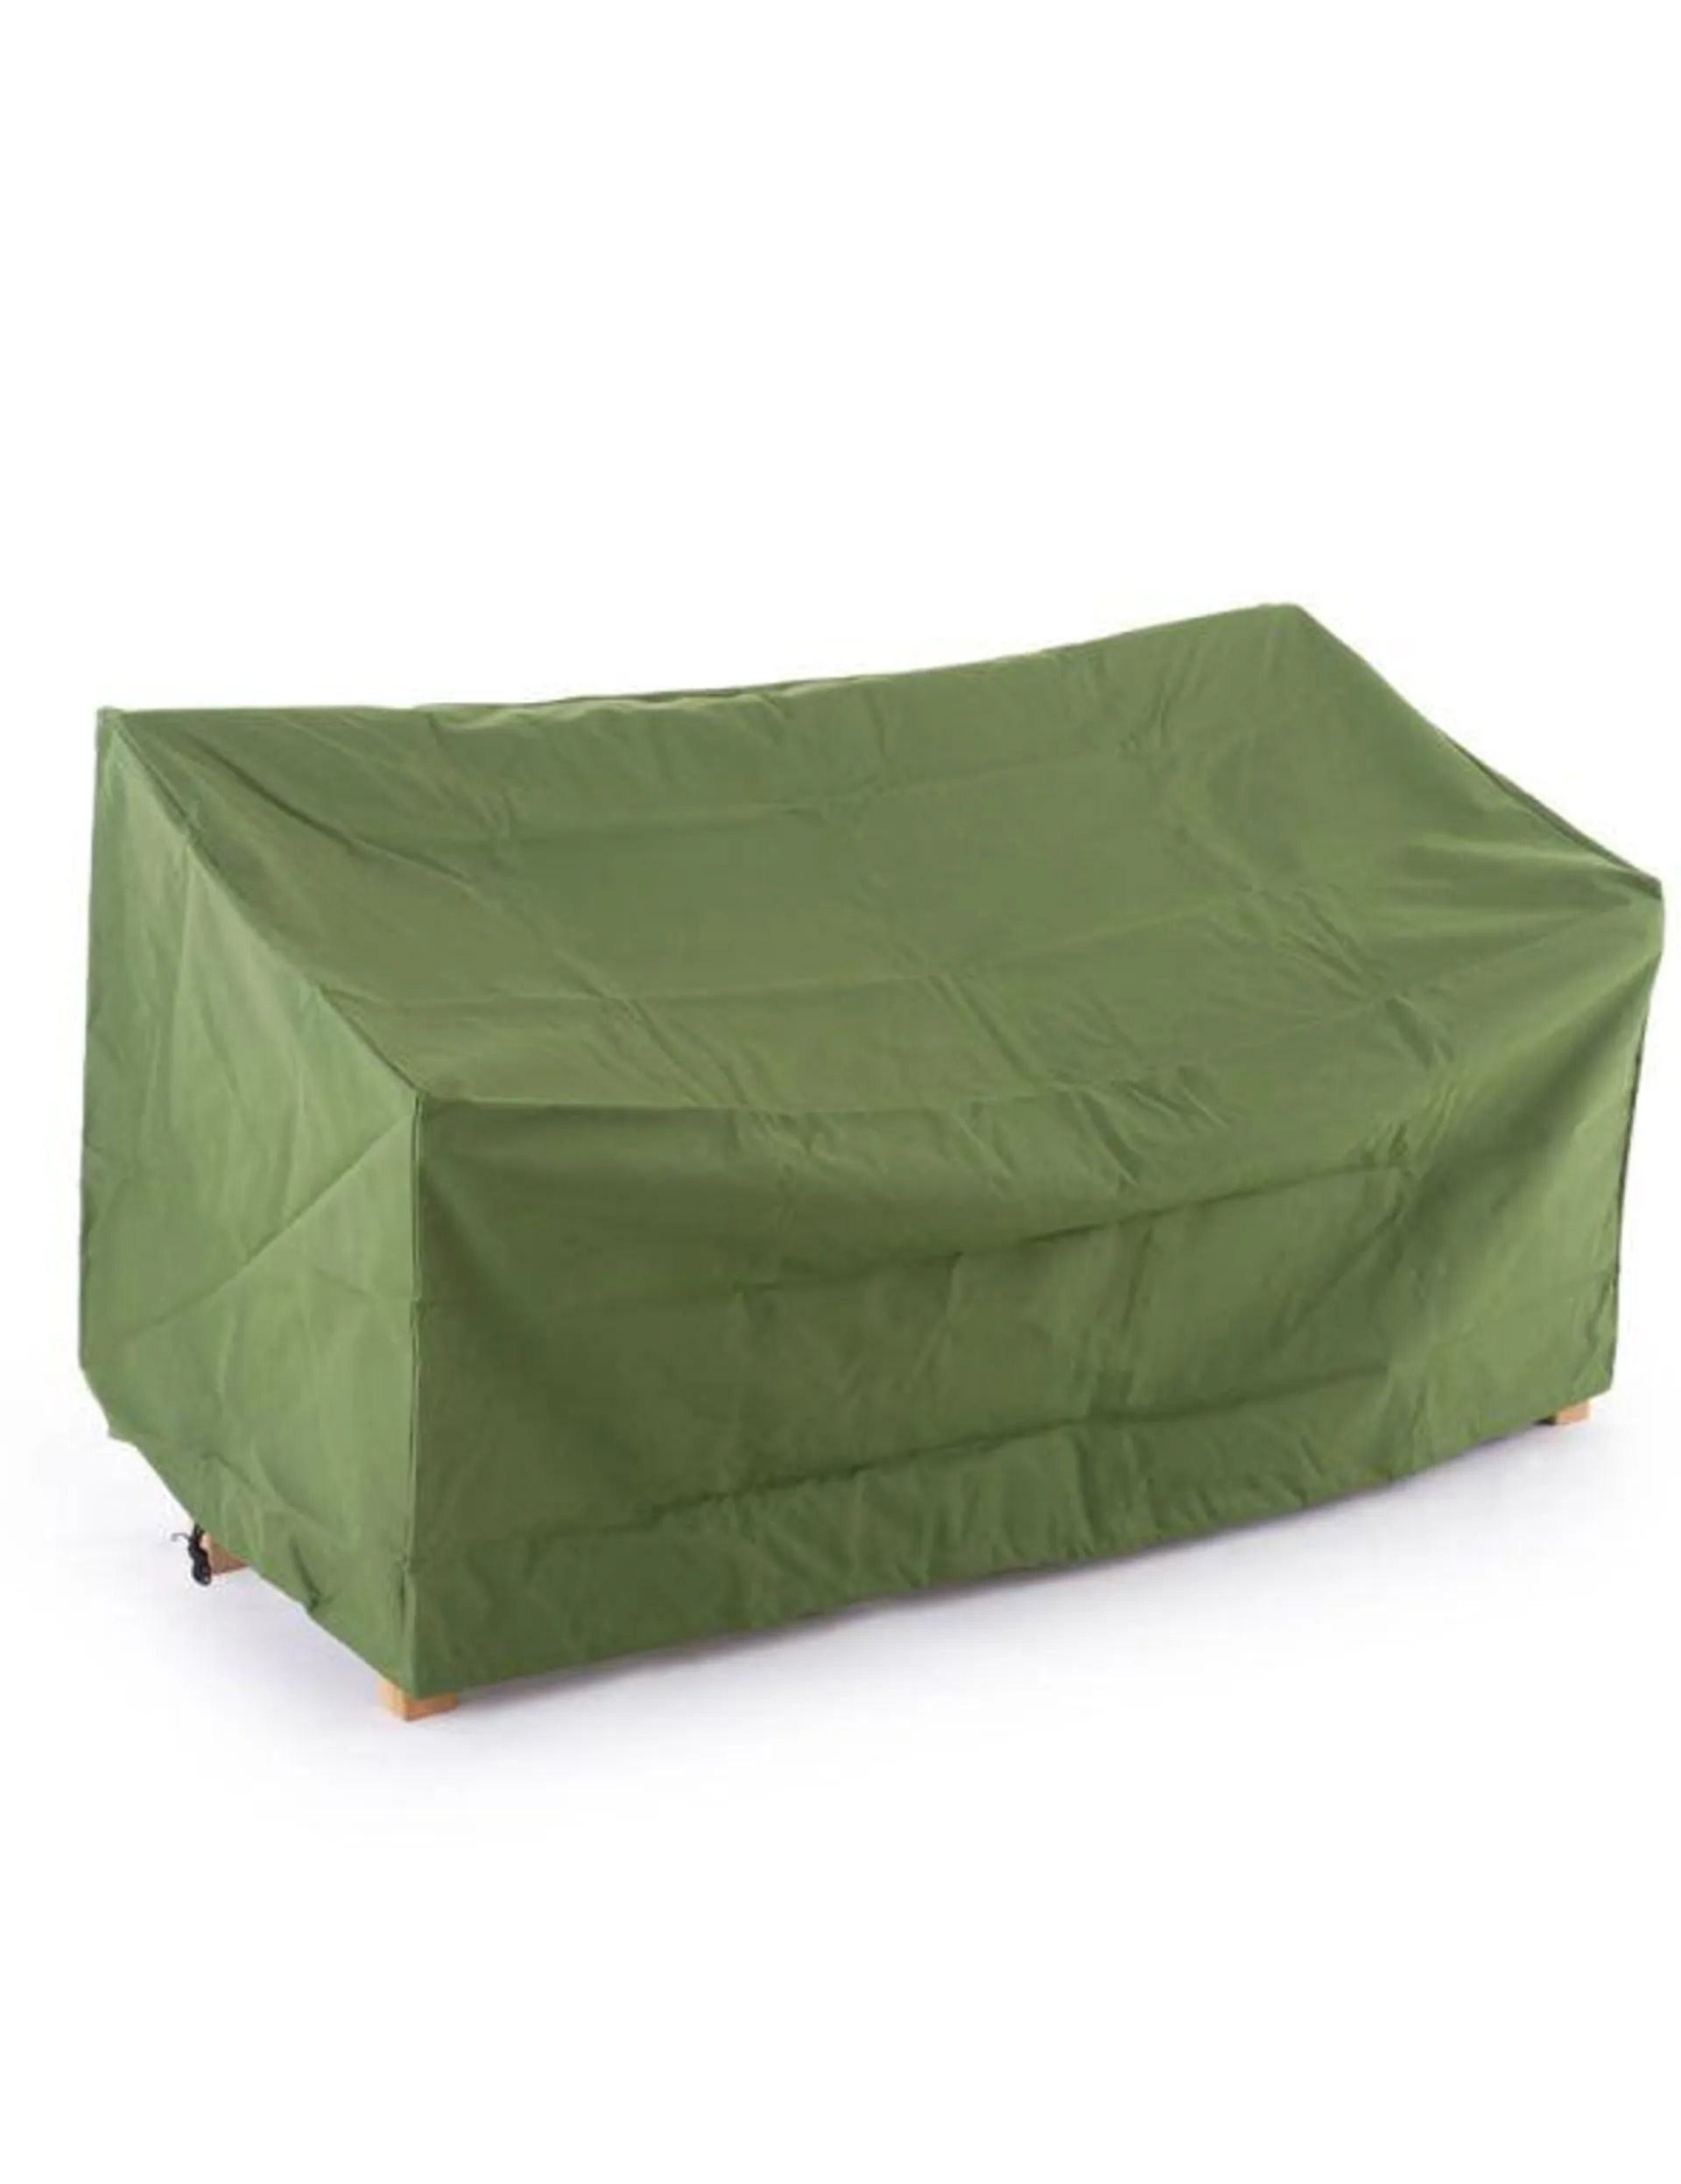 Copertura verde per divano cm 200